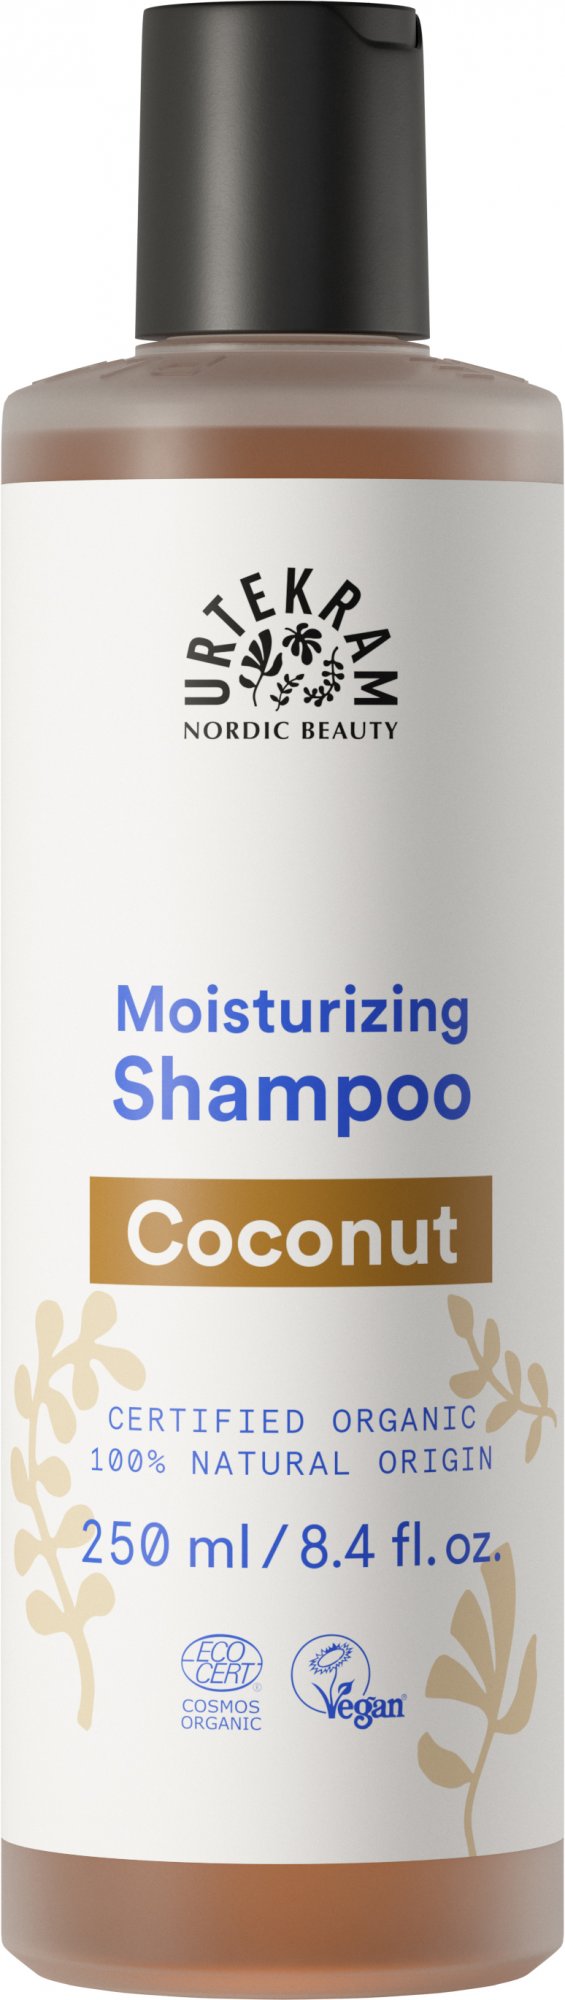 Urtekram Hydratační šampon s kokosovým nektarem BIO 250 ml Urtekram